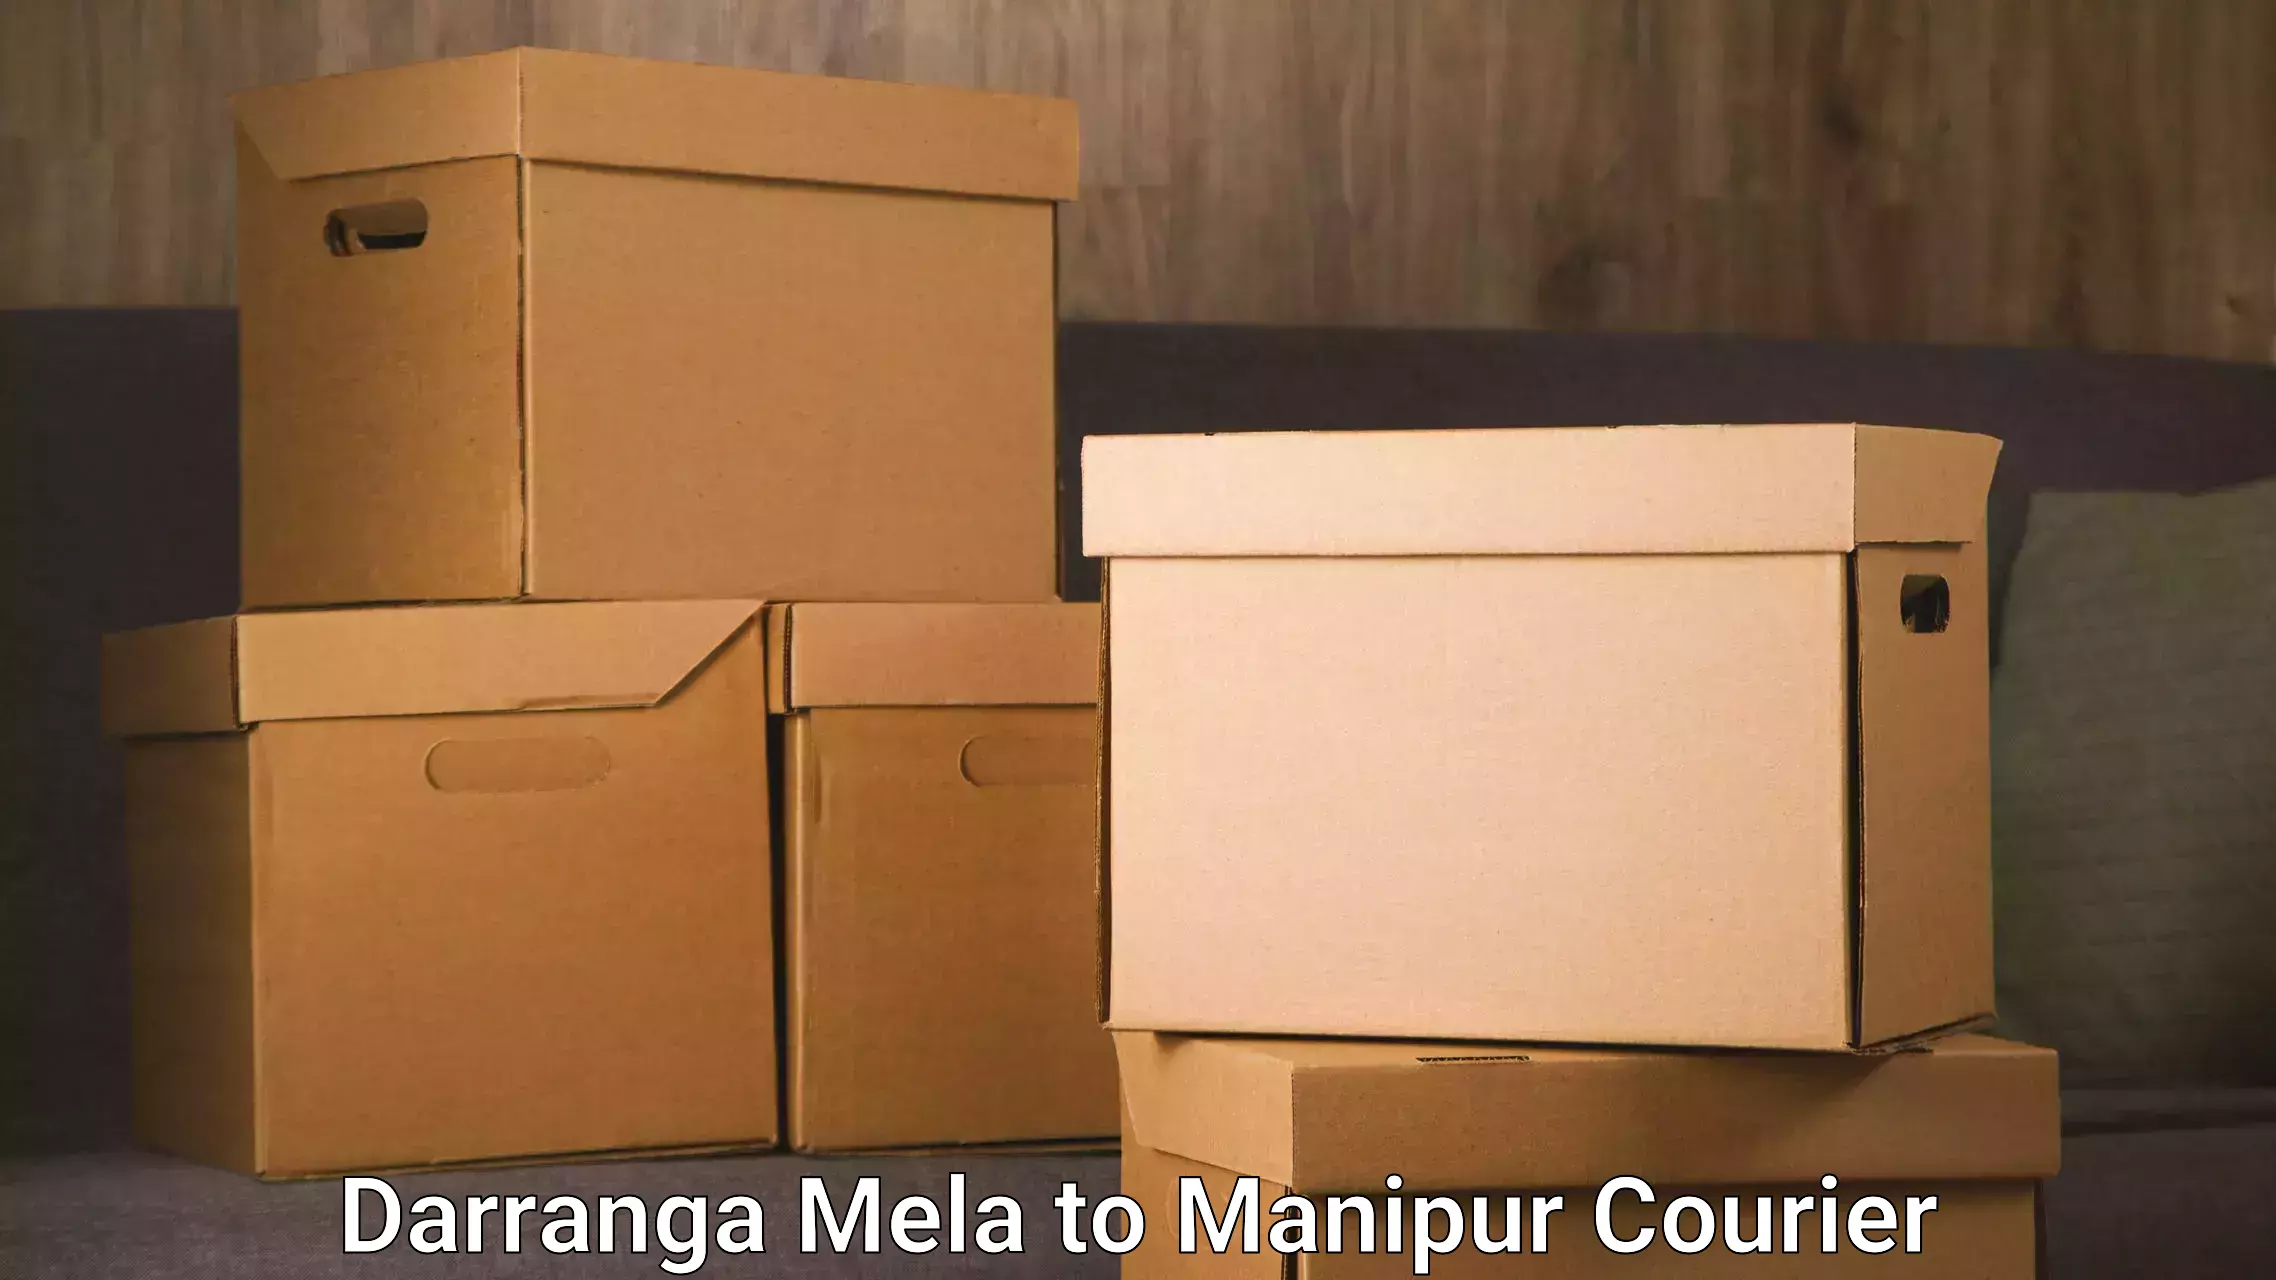 Full-service courier options Darranga Mela to Chandel